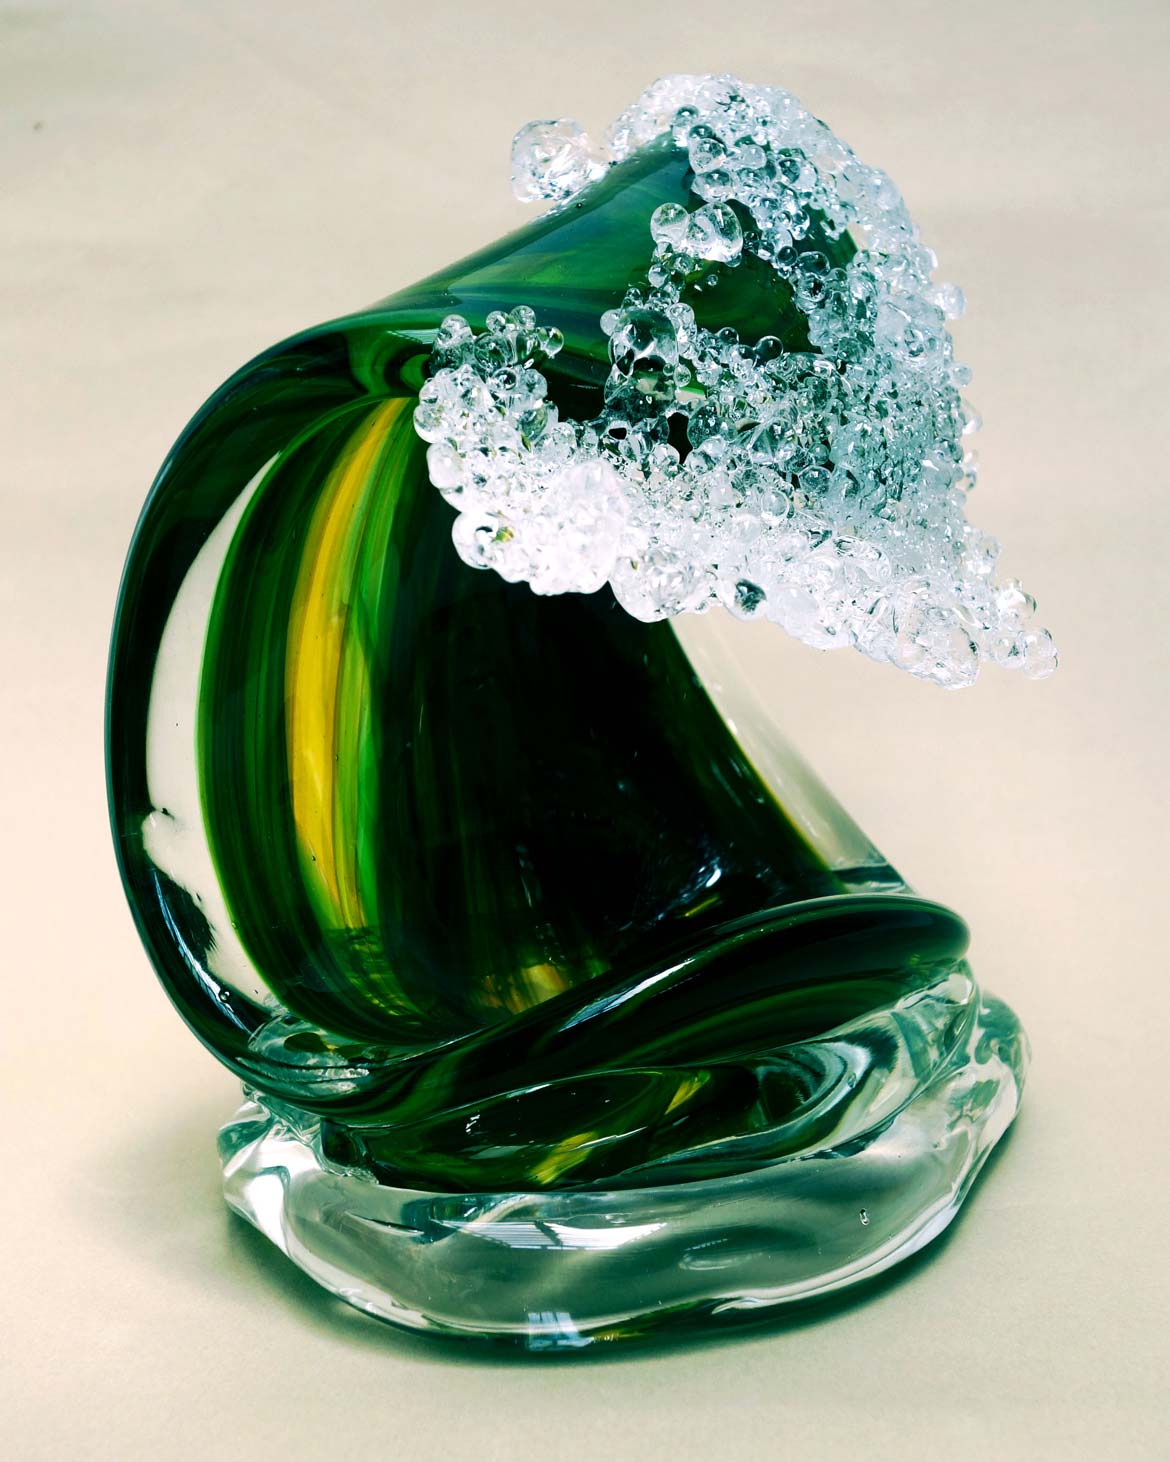 alt="Hand-Sculpted Glass Tulane Green Wave"